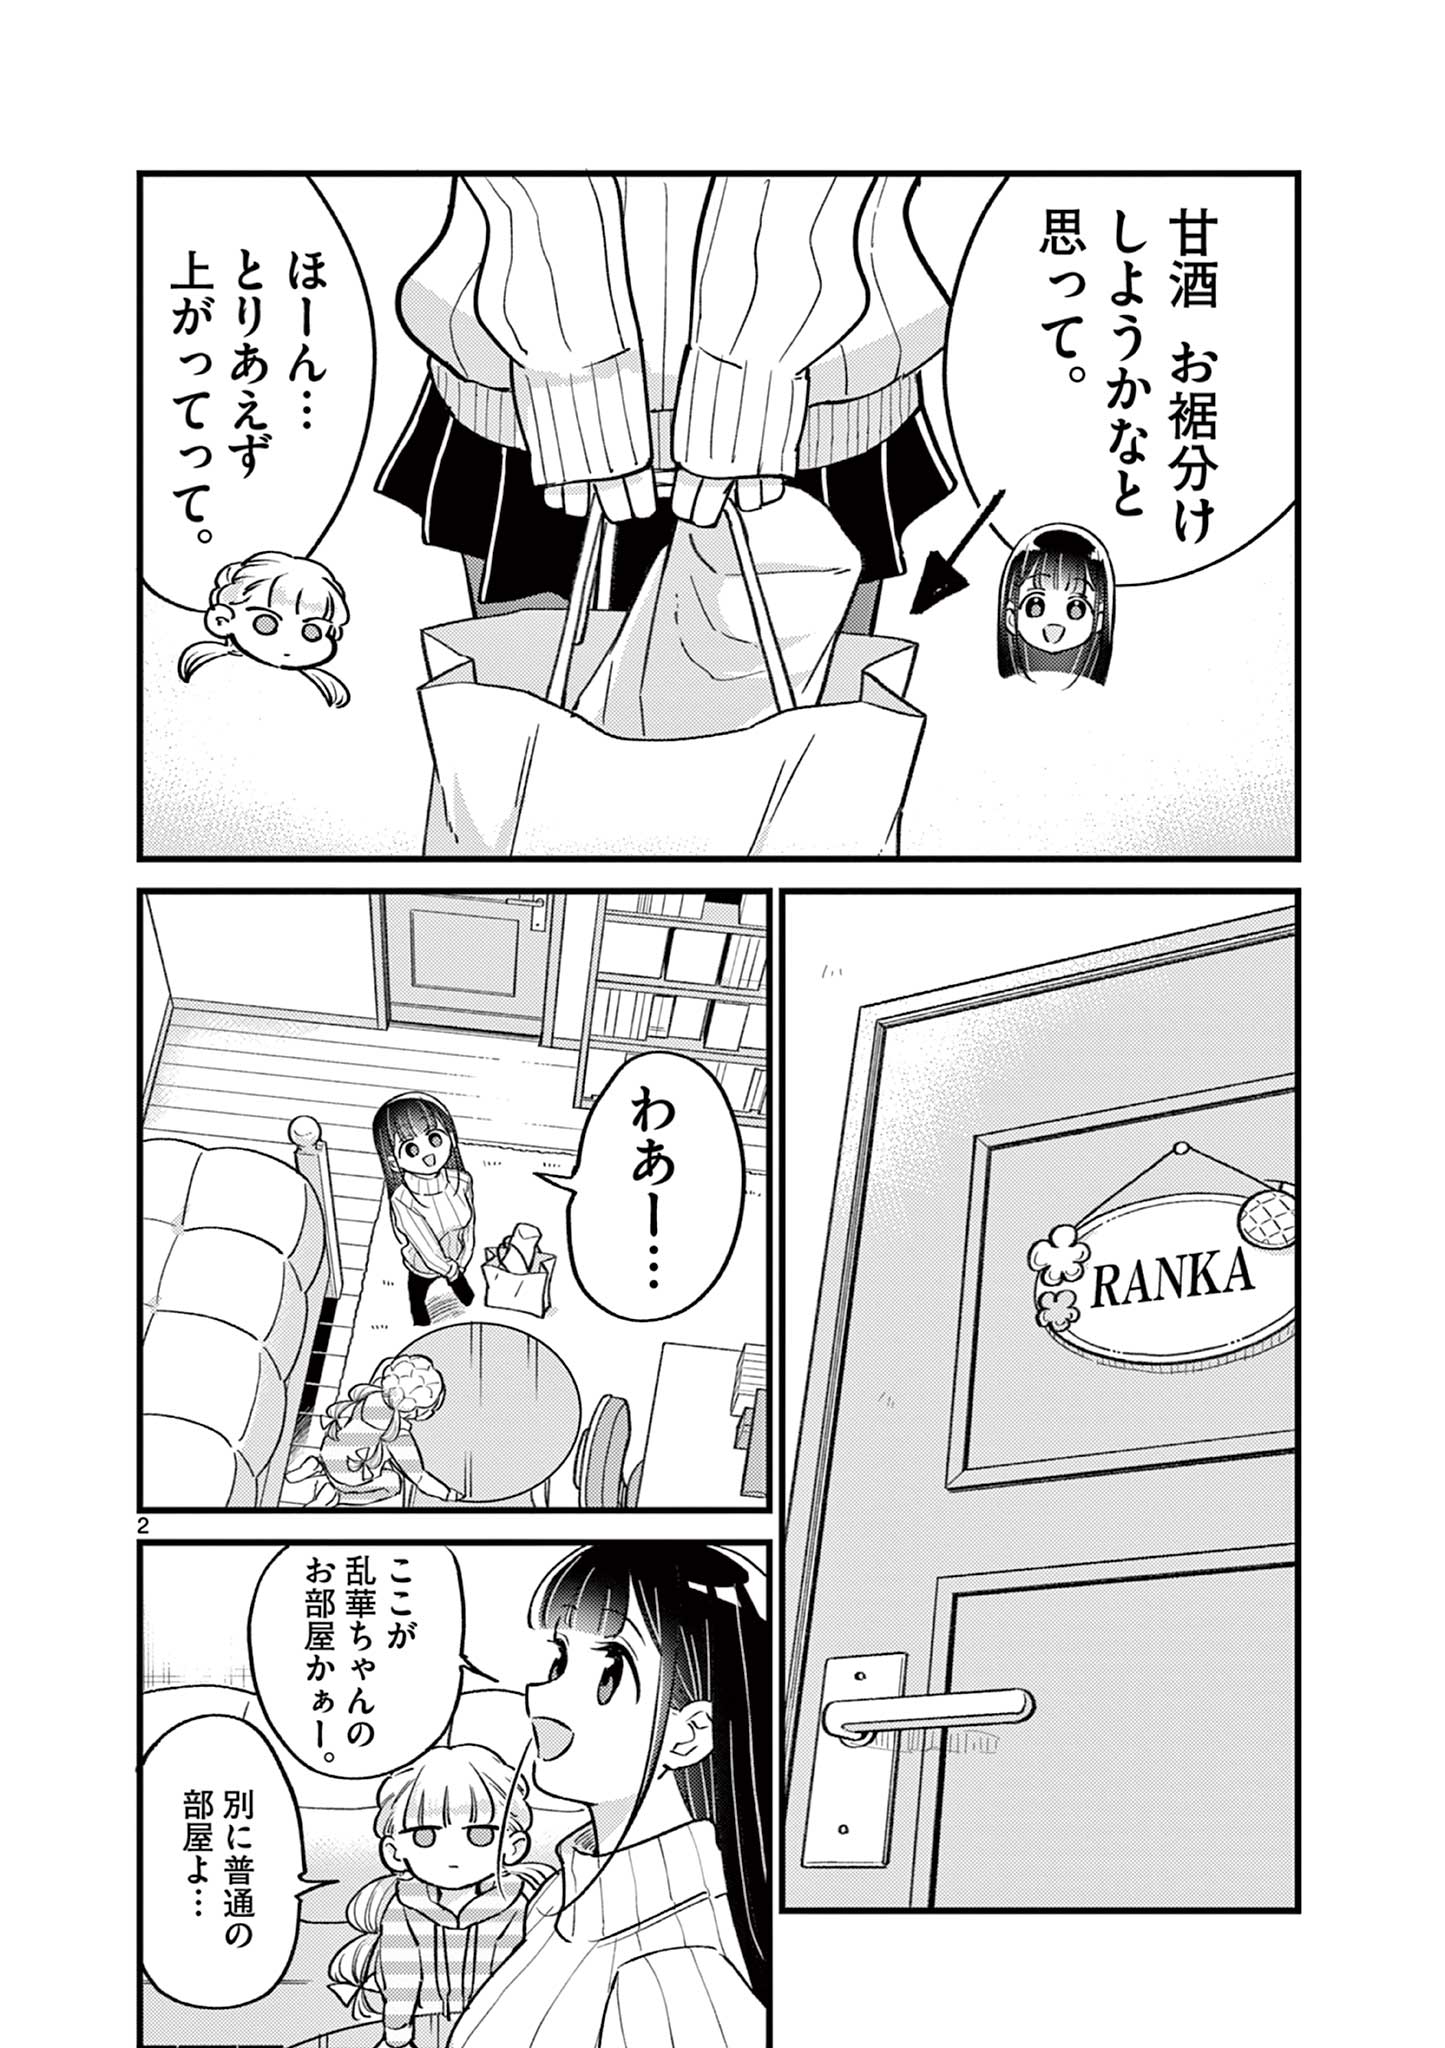 Ranka-chan wa Bitch ni Naritai - Chapter 17 - Page 2